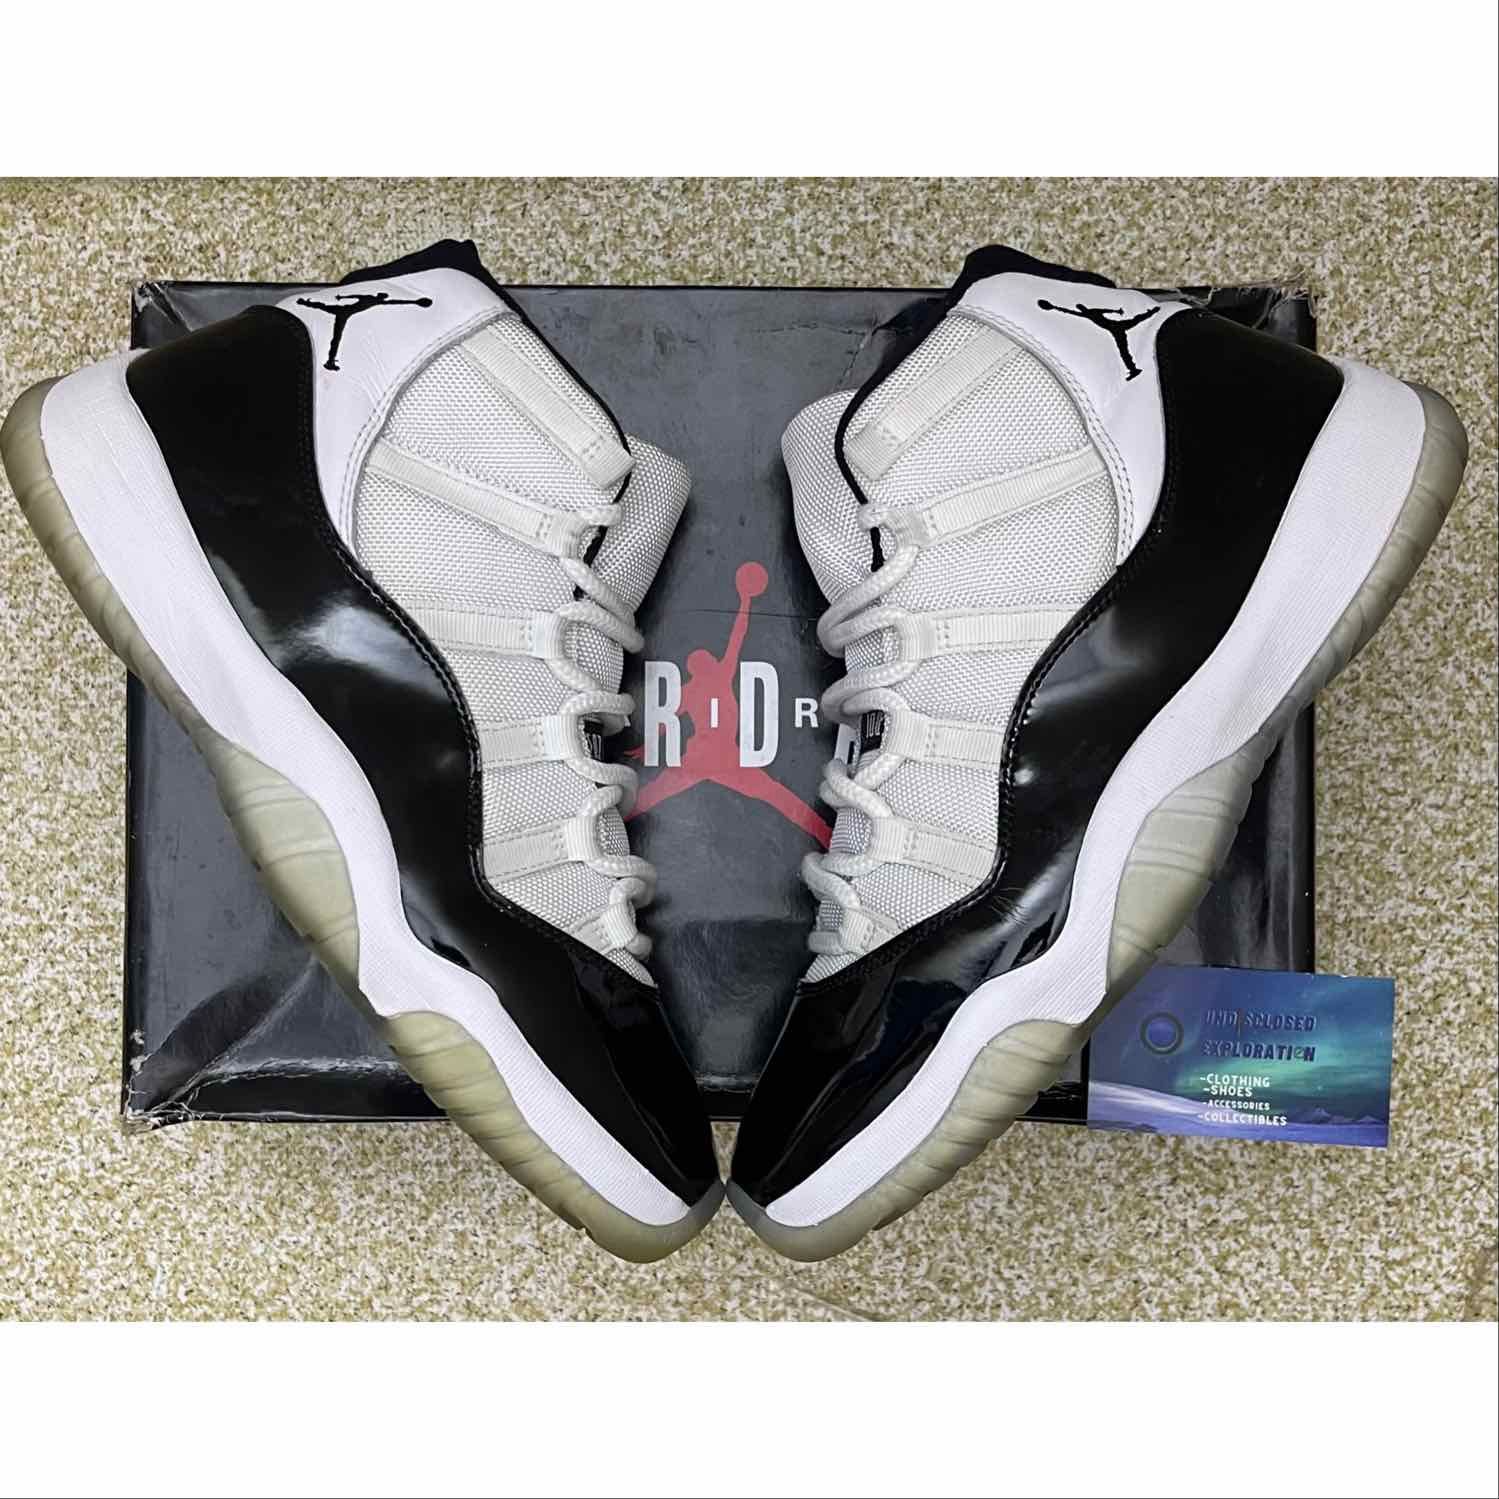 Nike Air Jordan 11 Retro Concord Size 9.5 Men